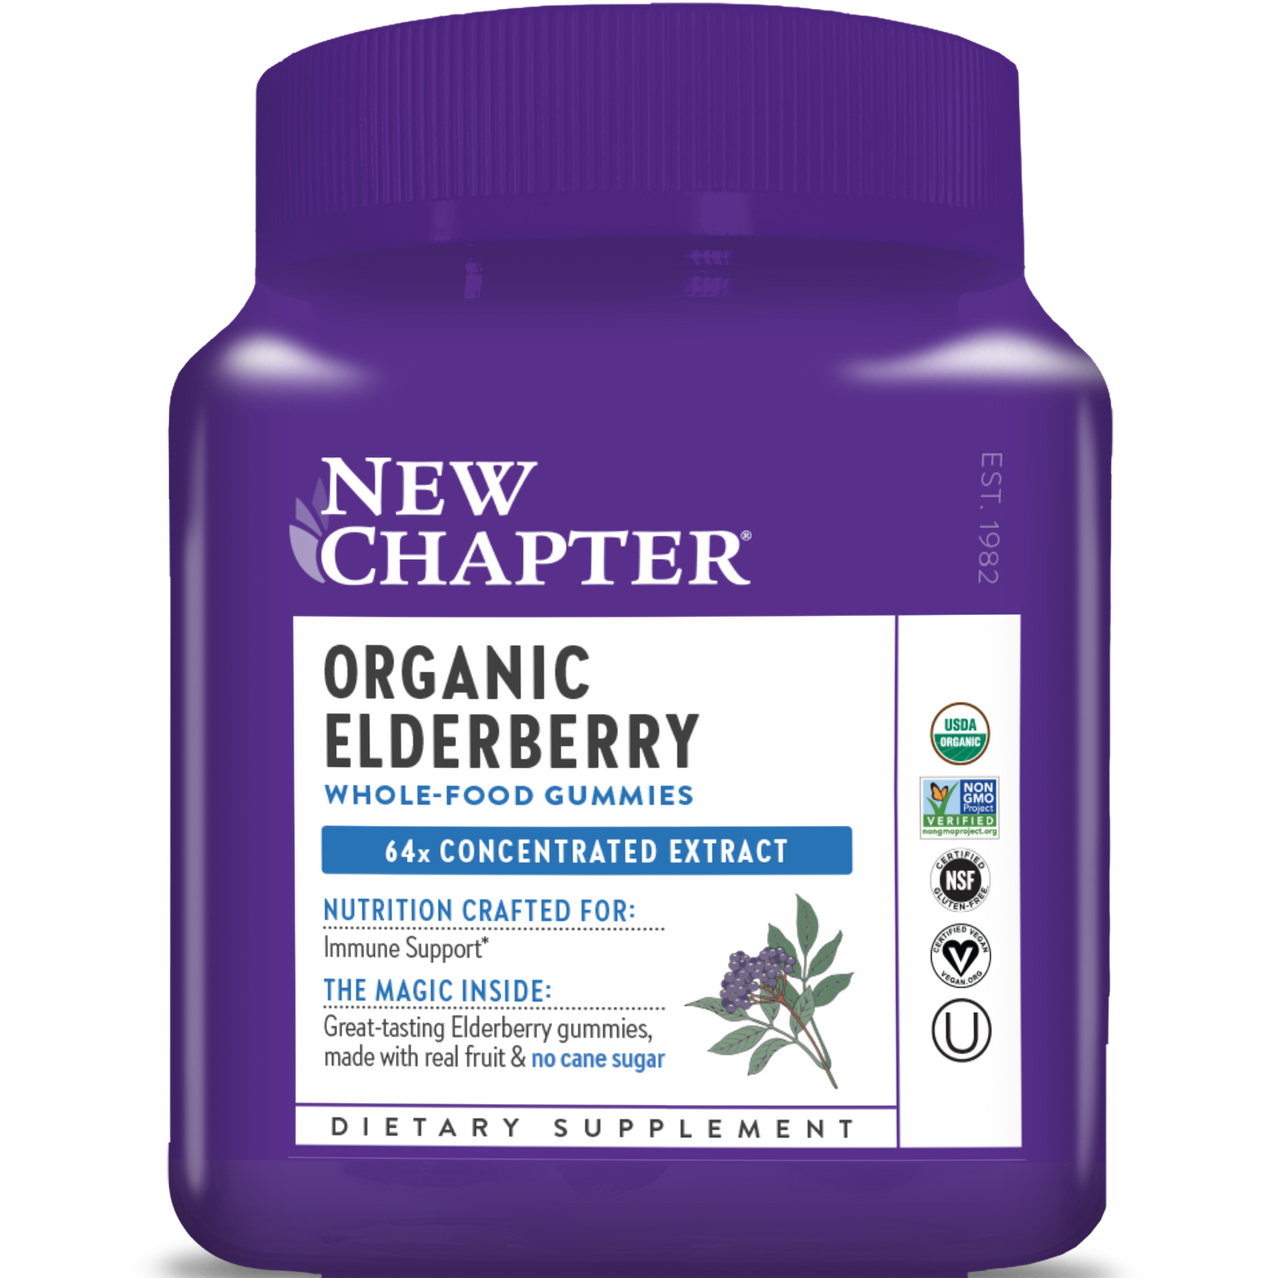 Organic Elderberry Whole-Food Gummies